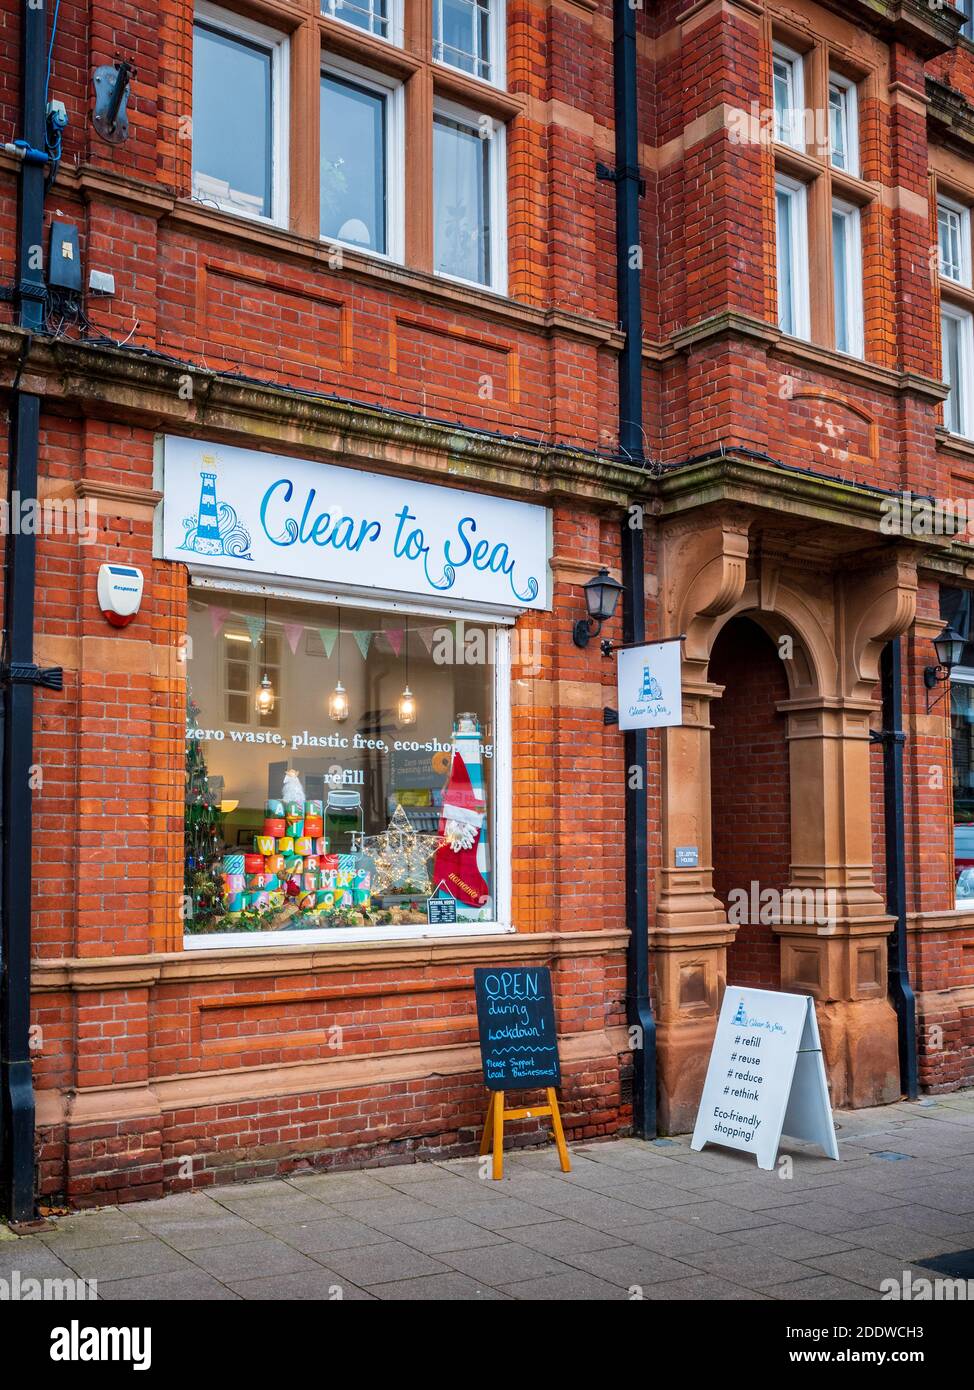 Clear to Sea zero waste shop Bury St Edmunds Suffolk UK. Plastic free shop. Stock Photo